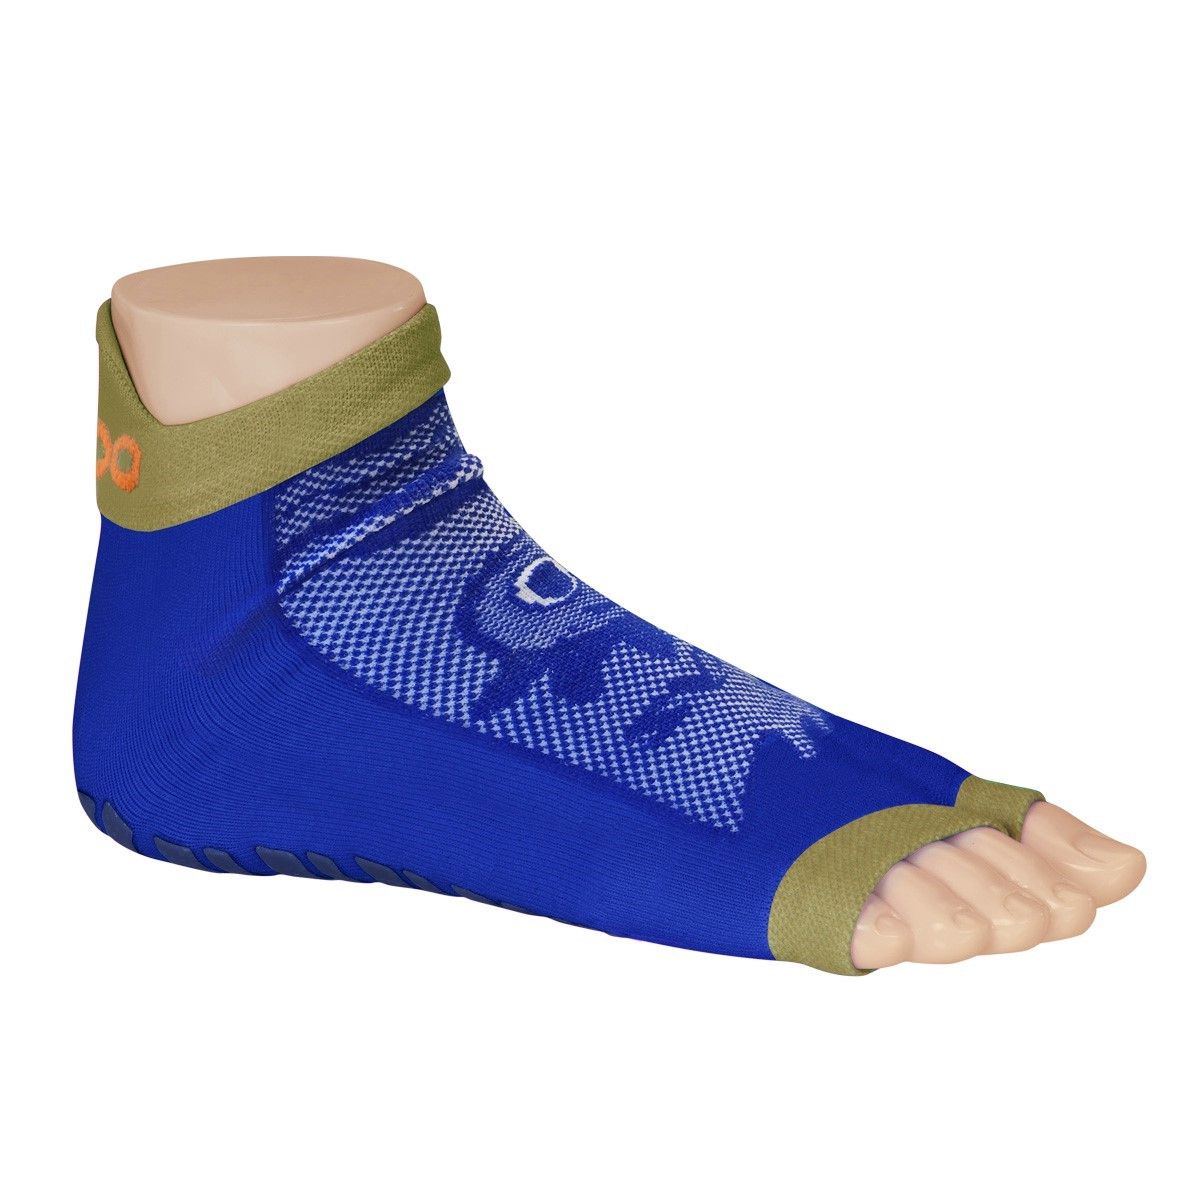 Sweakers Anti-Rutsch-Schwimm-Socken, blau, Größe 27-30